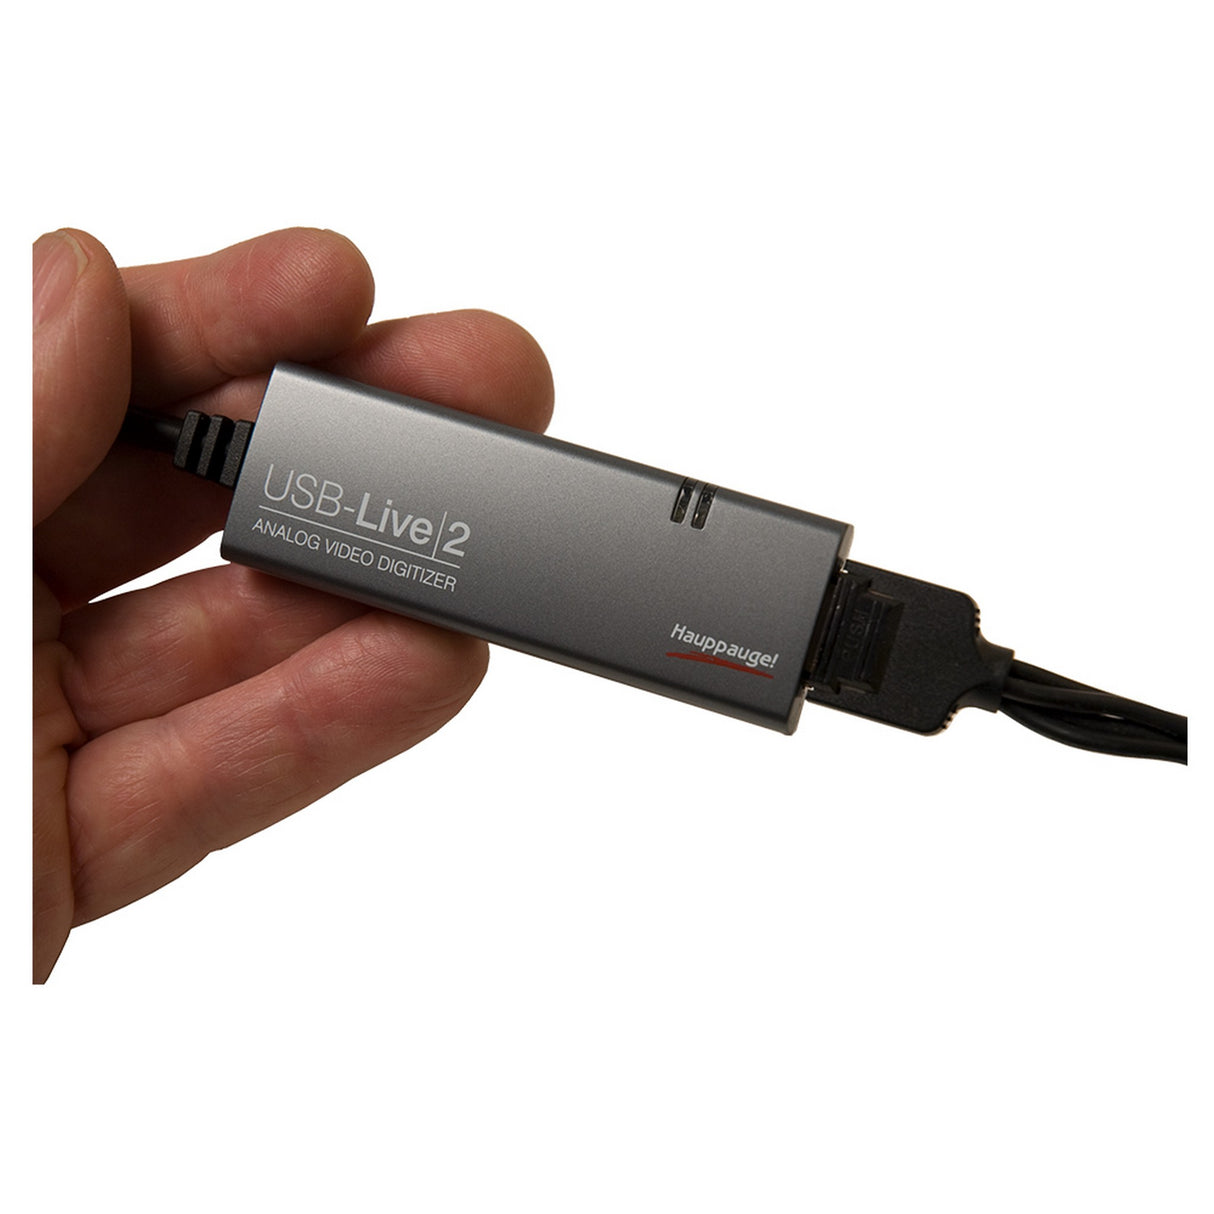 Hauppauge USB-Live2 Analog Video Digitizer